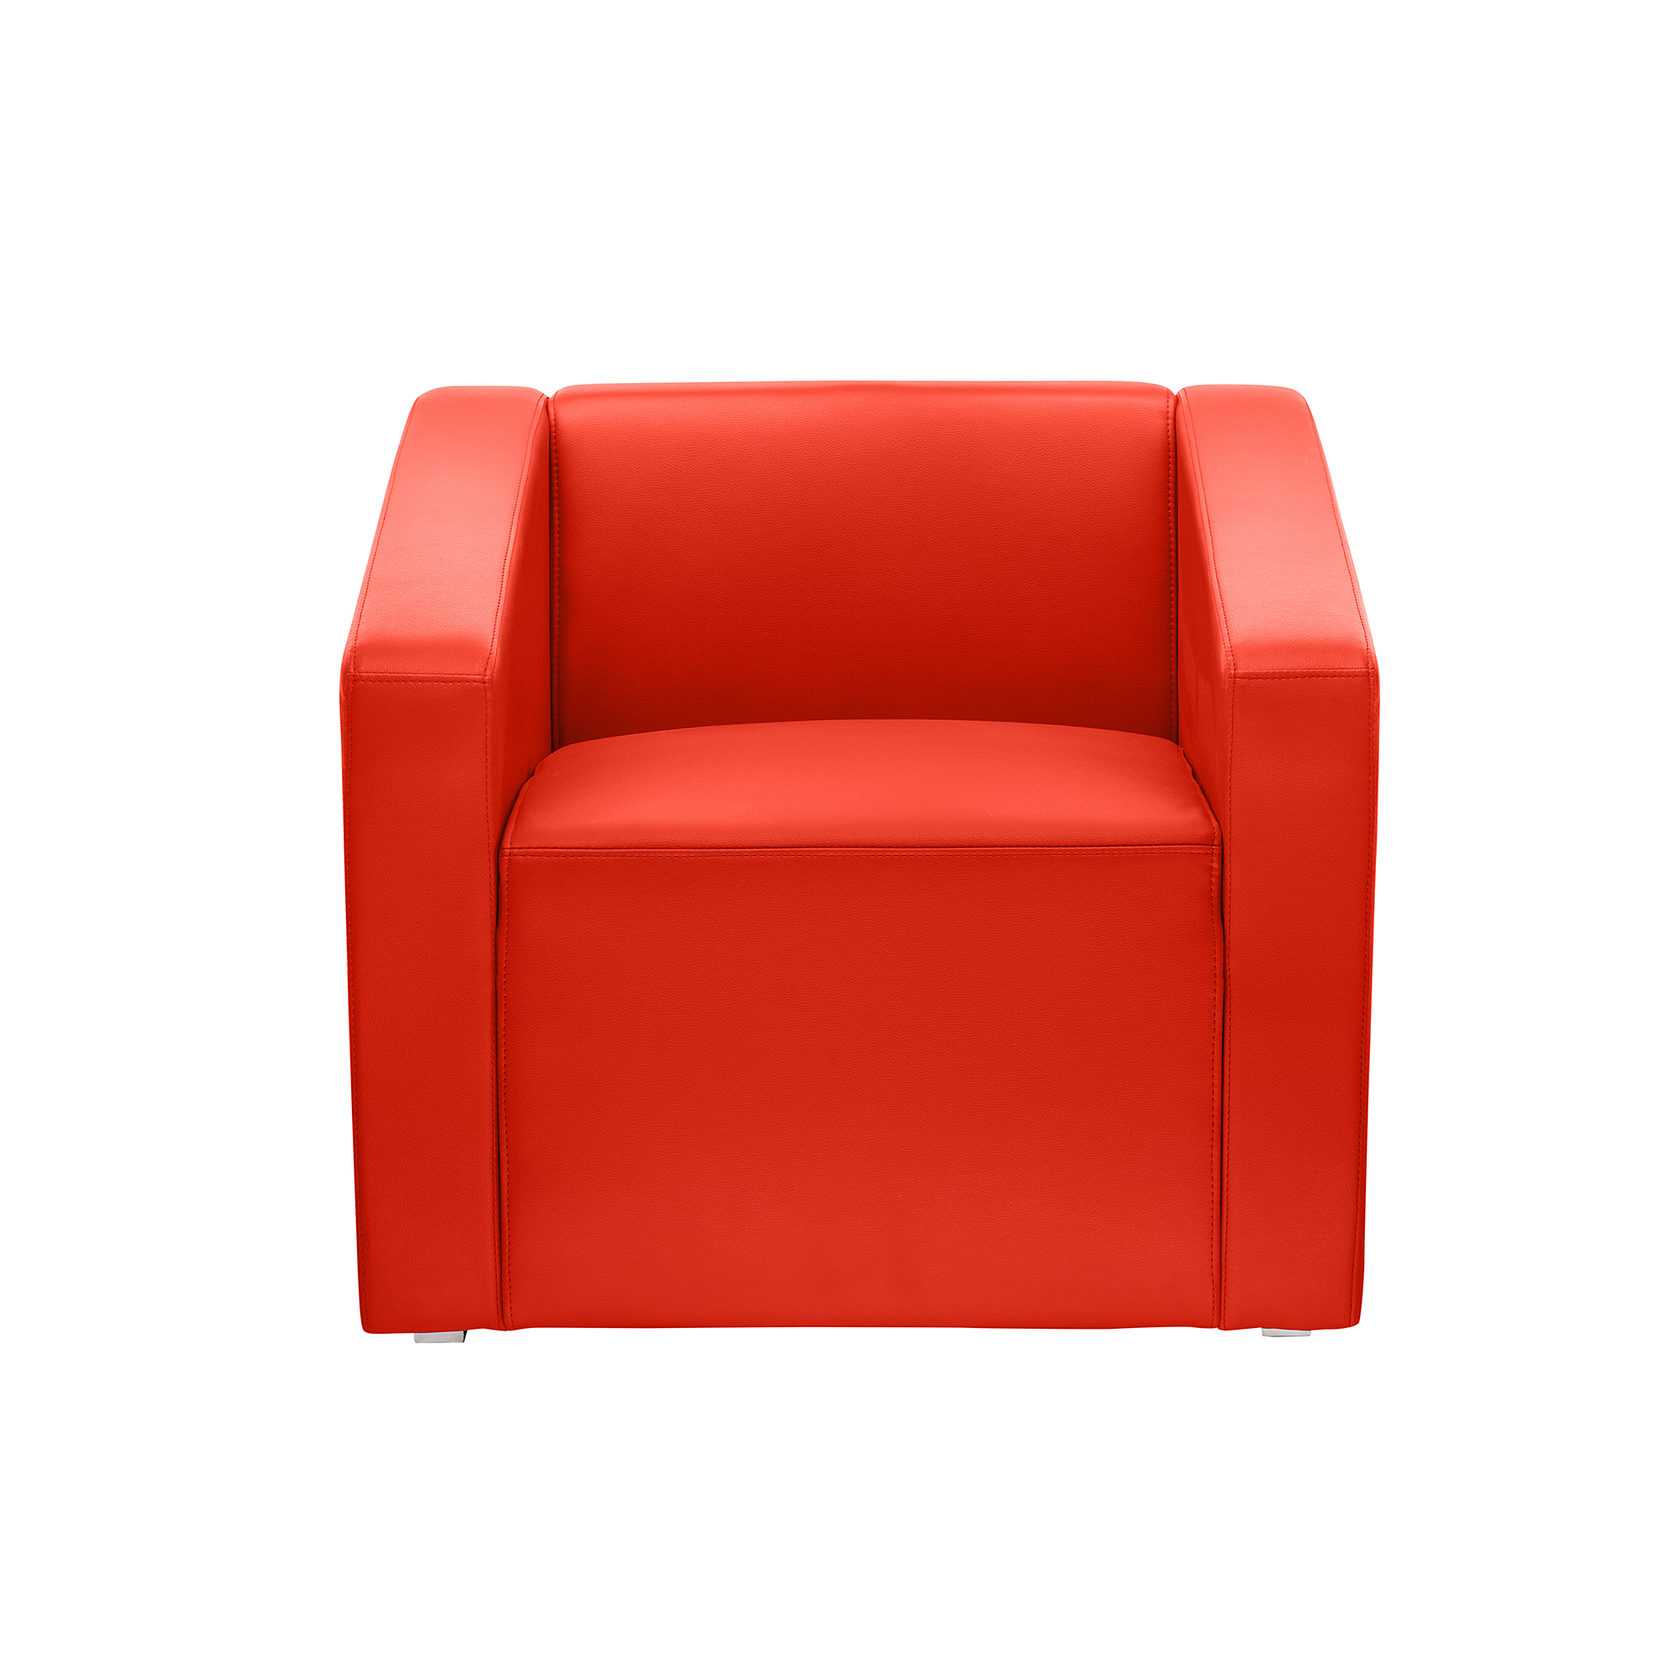 Кресла от производителя в нижнем новгороде. Red Square кресло. Кресло икеа красное. Red Square стул.